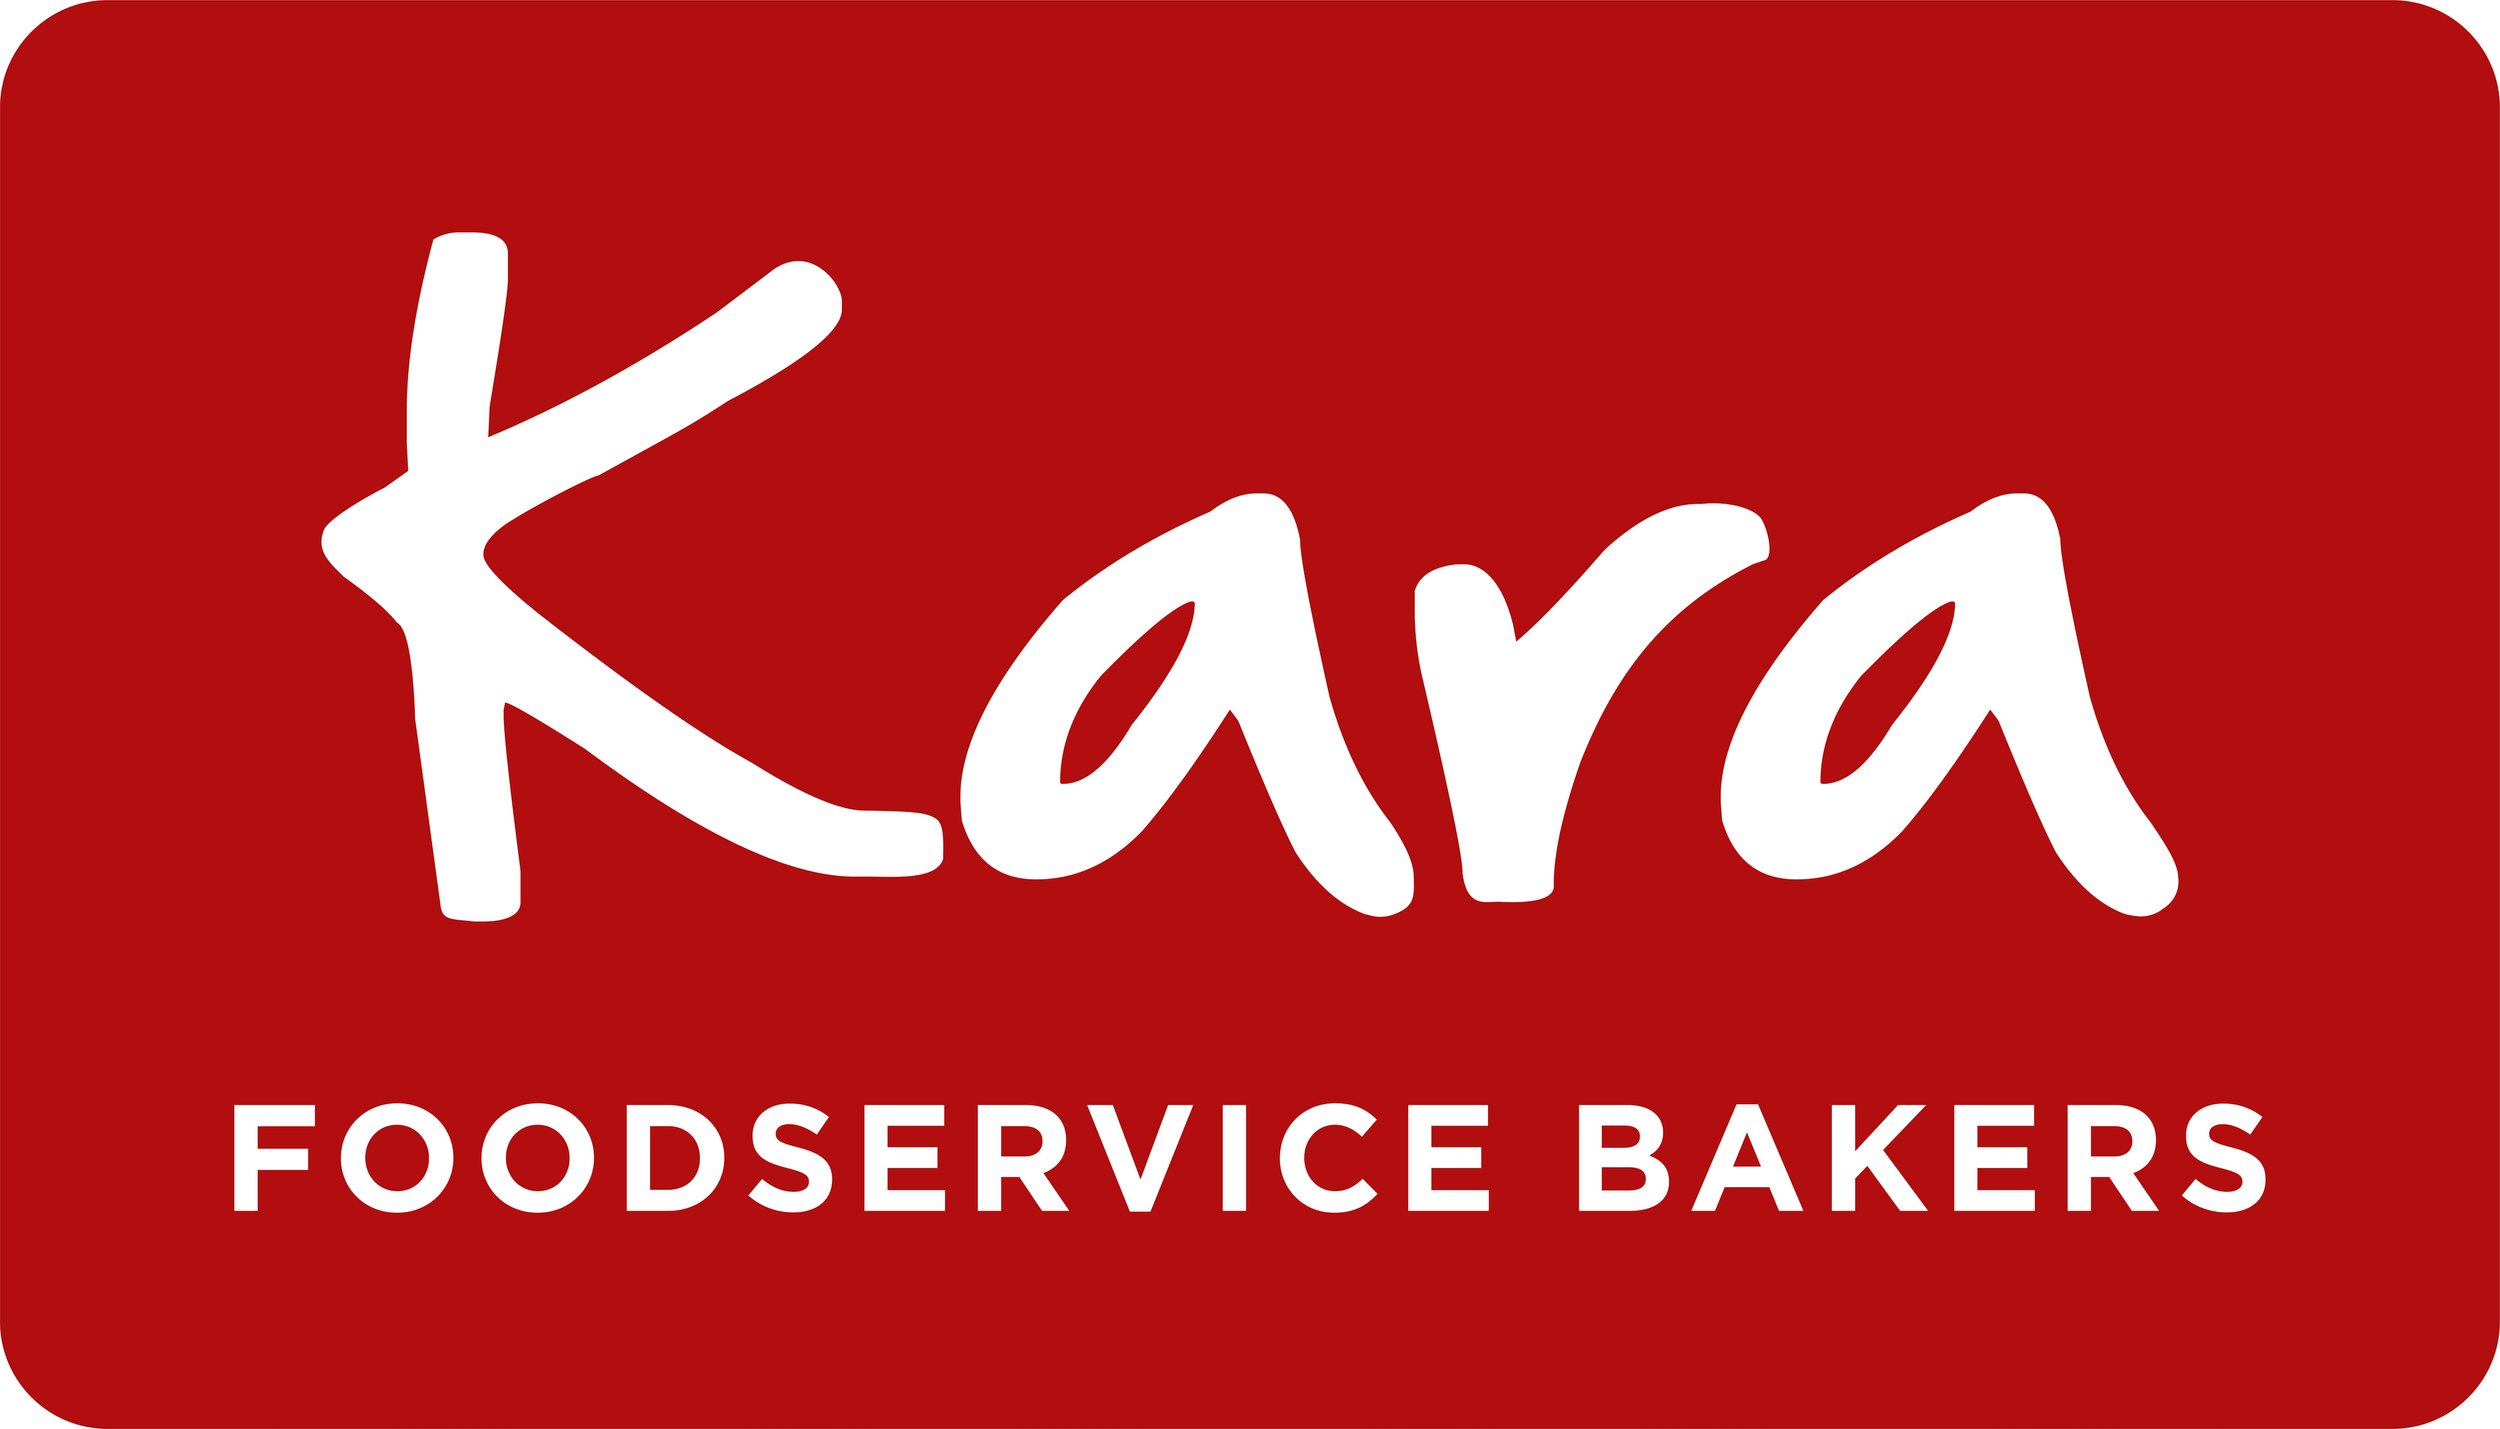 Kara Foodservice Bakers logo.jpg